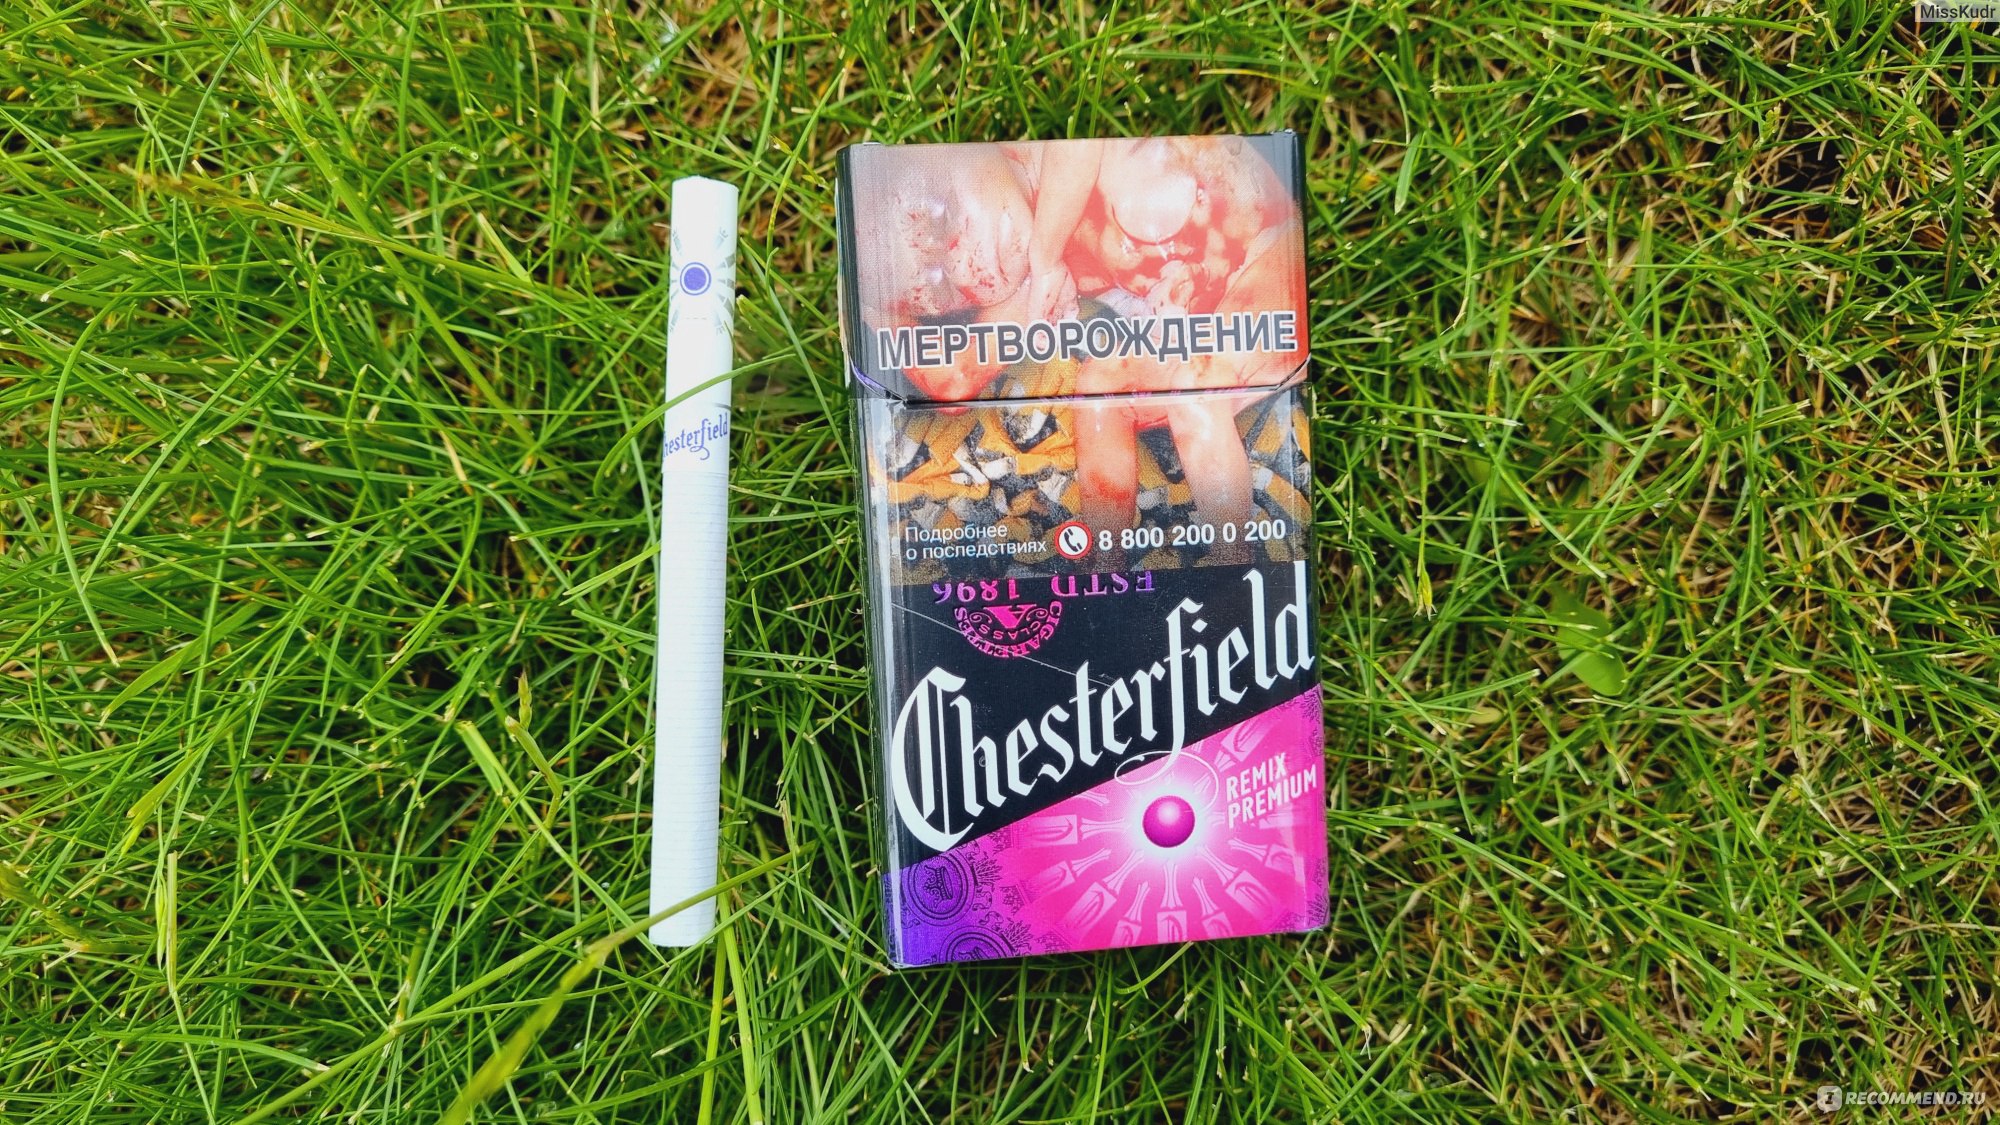 Честер компакт цена. Chesterfield сигареты с кнопкой вкусы. Сигареты с фильтром "Chesterfield selection Compact". Честерфилд саммер микс сигареты. Сигареты Честер с кнопкой вкусы.